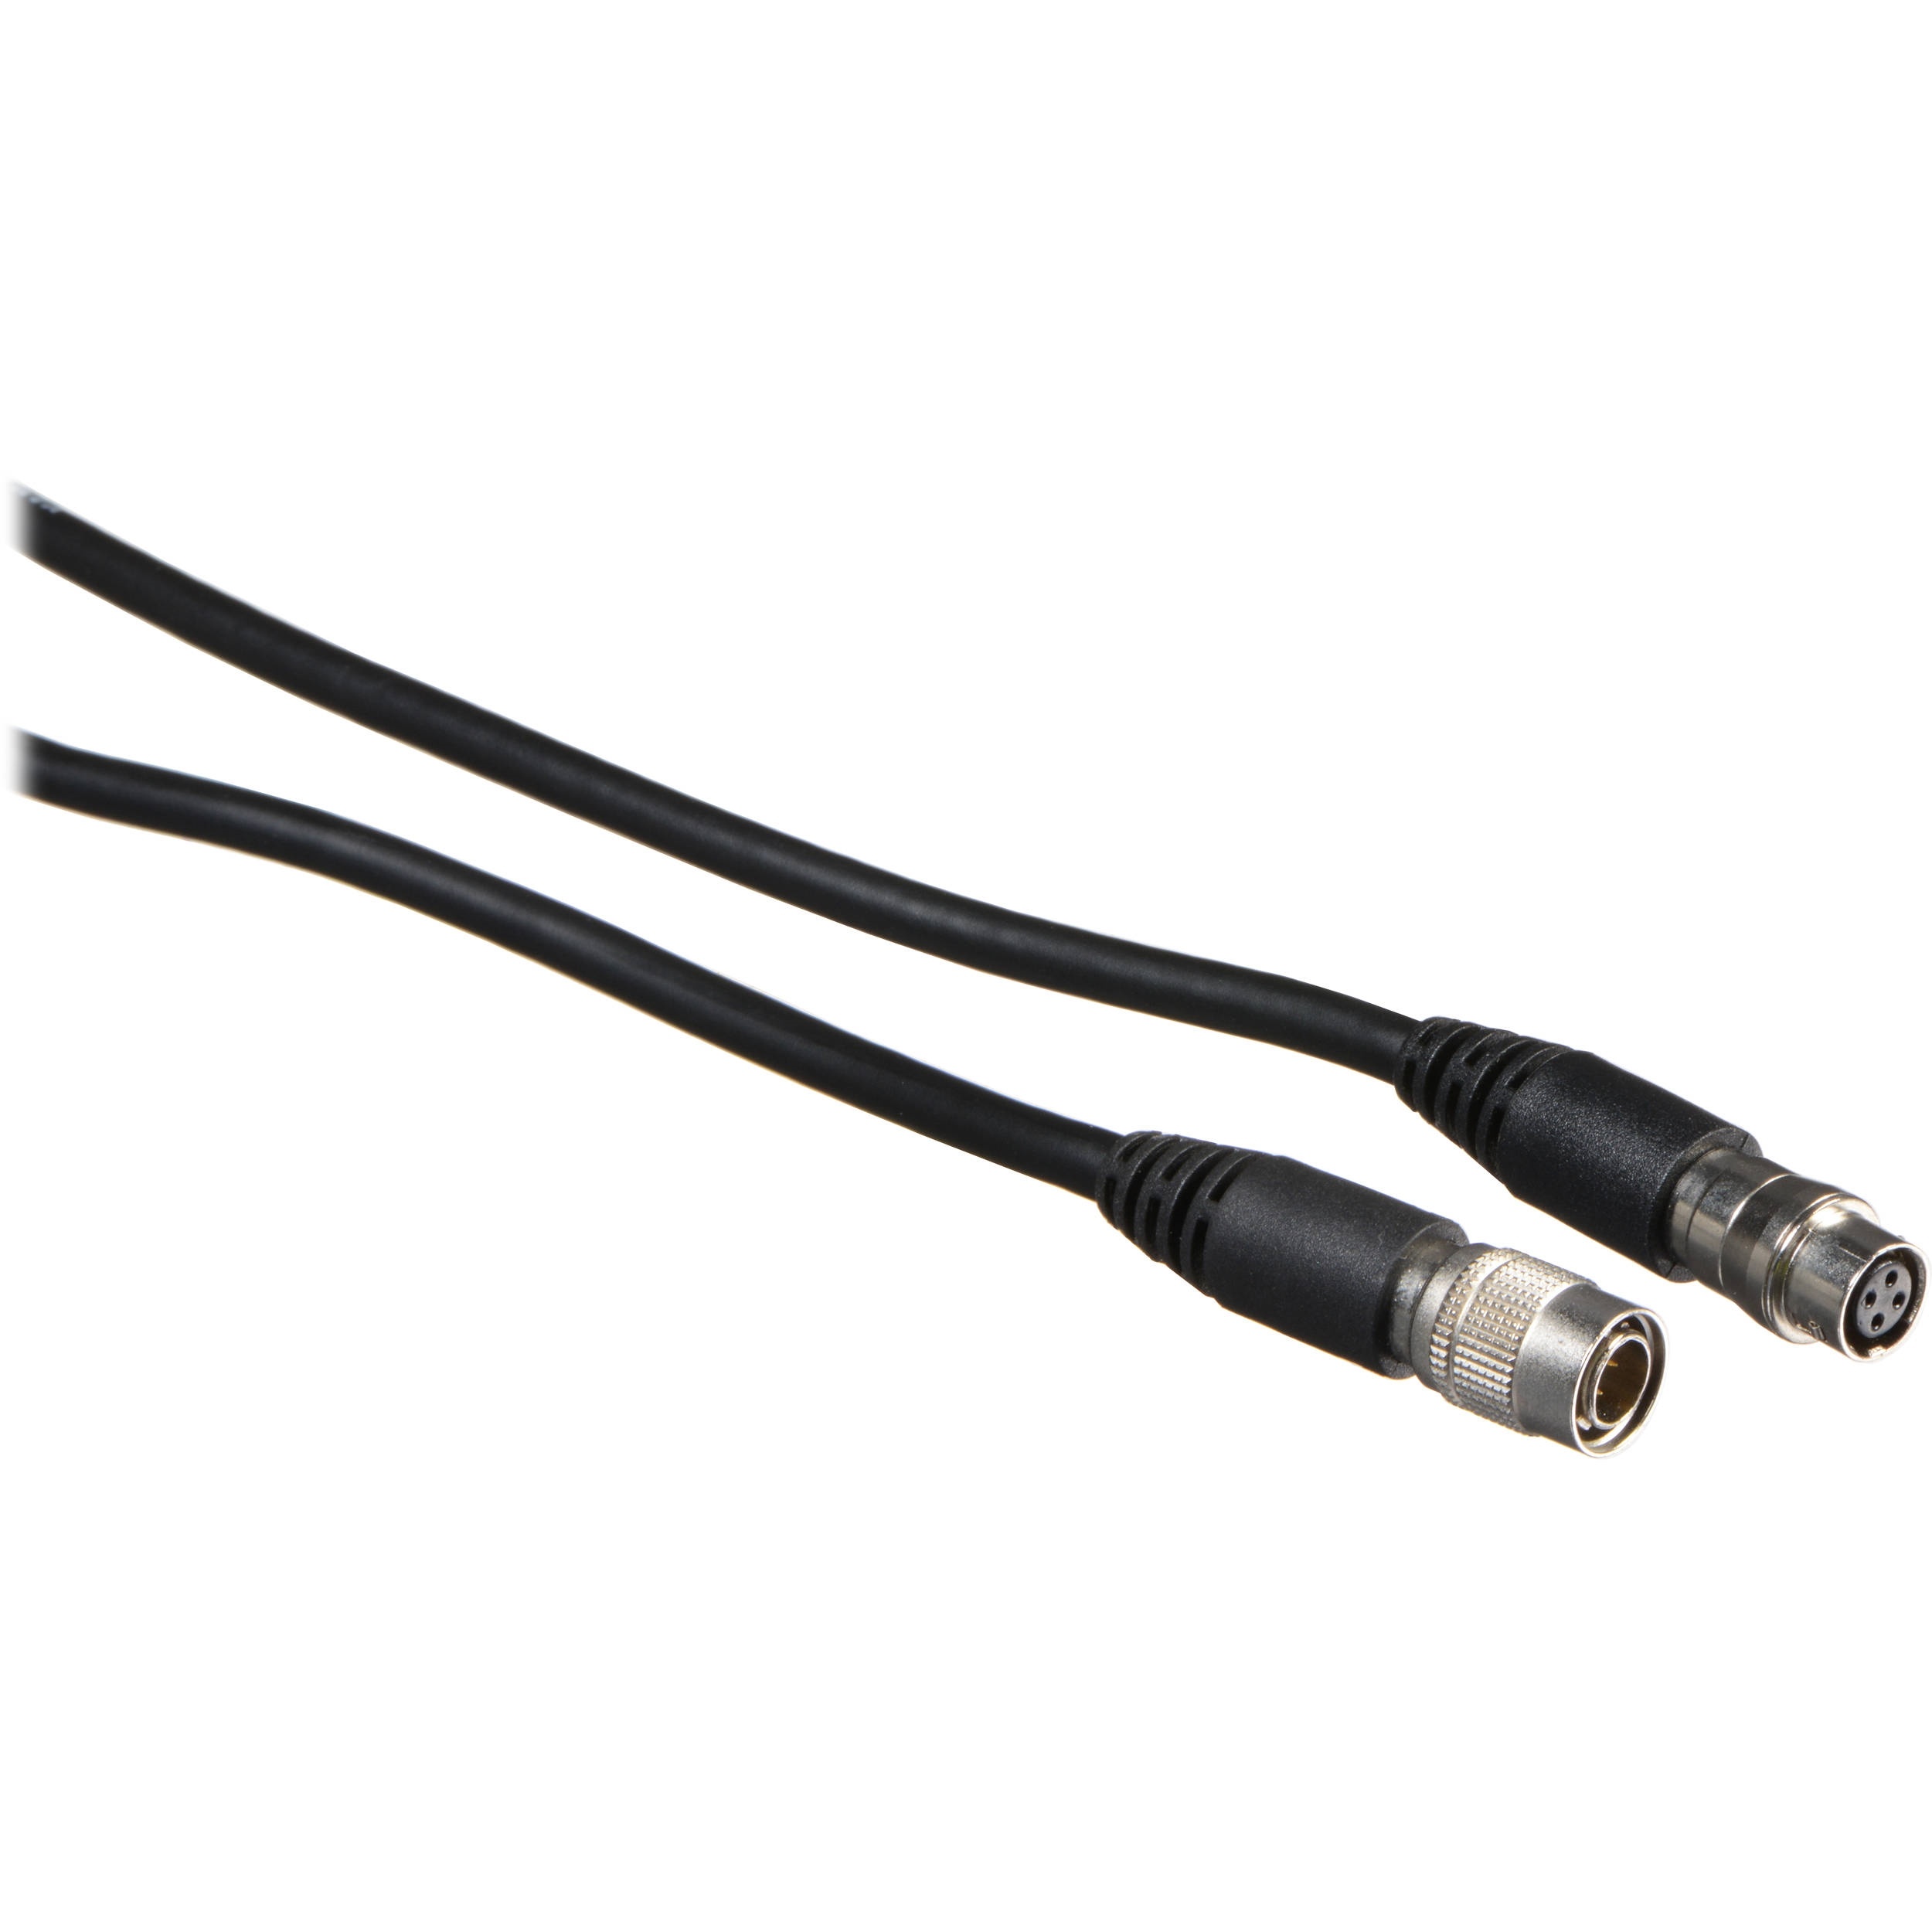 Teradek RT MK3.1 Power Cable Extension (39")